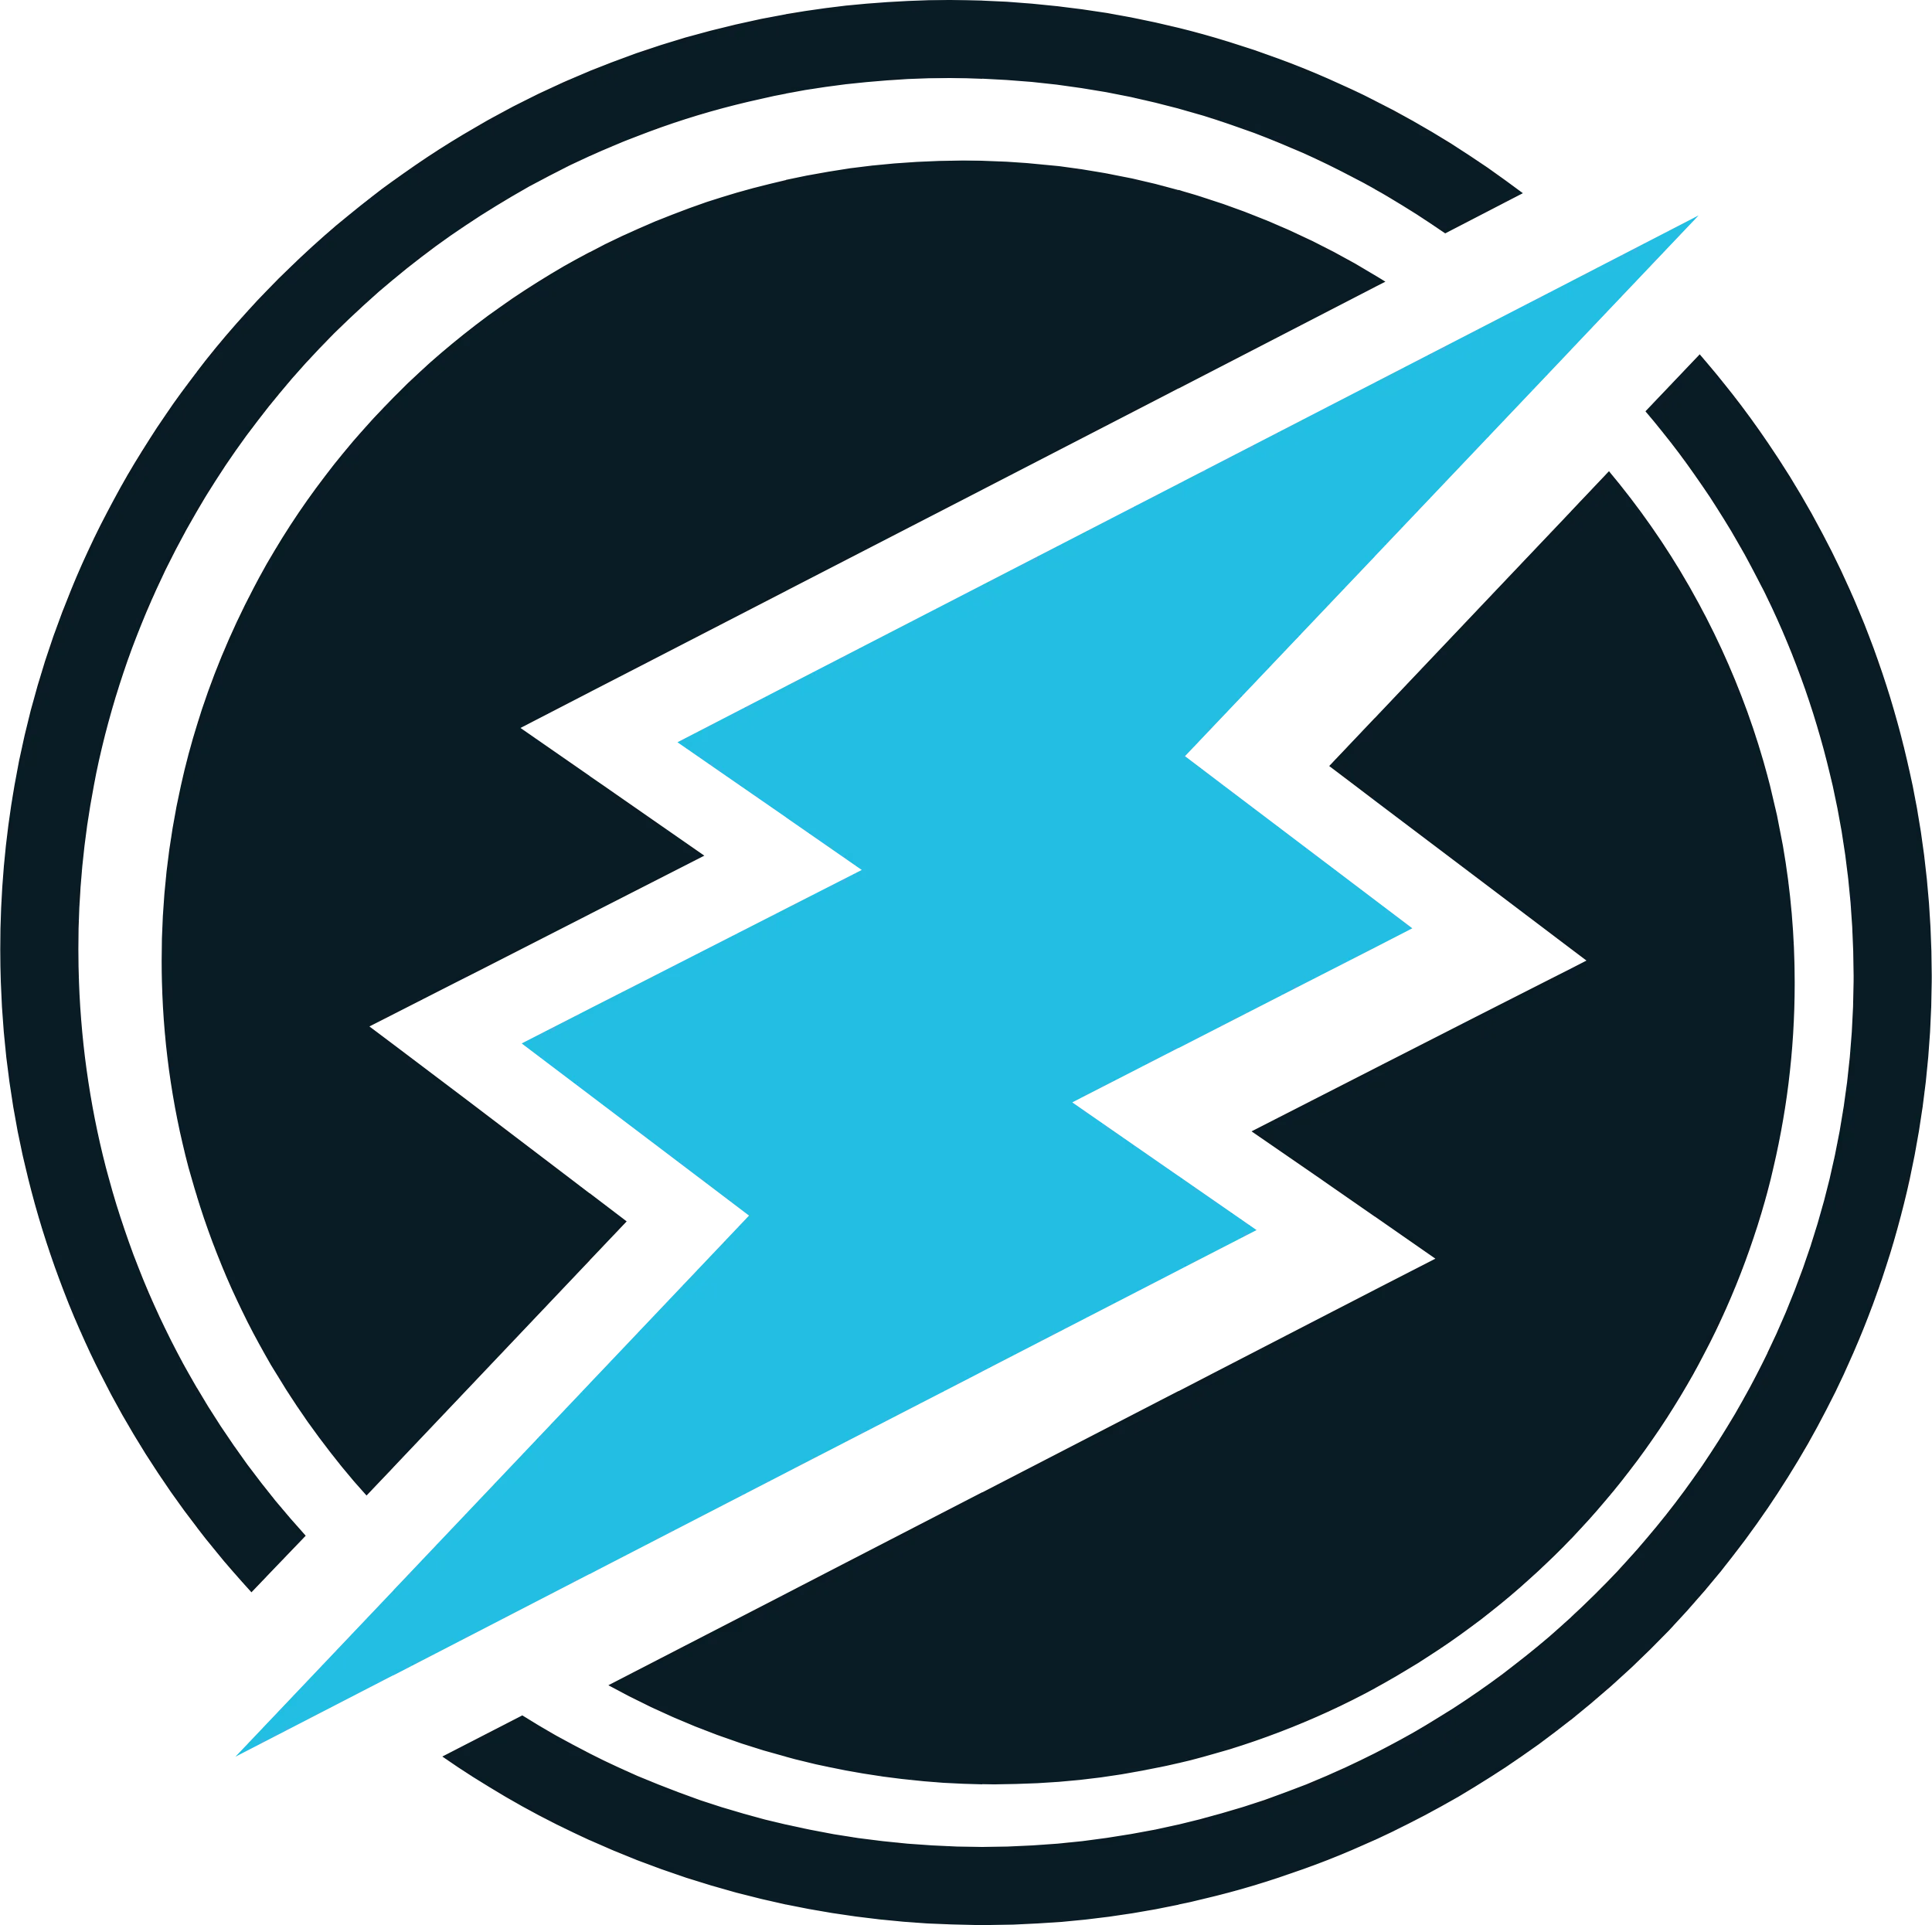 Electroneum logo in svg format